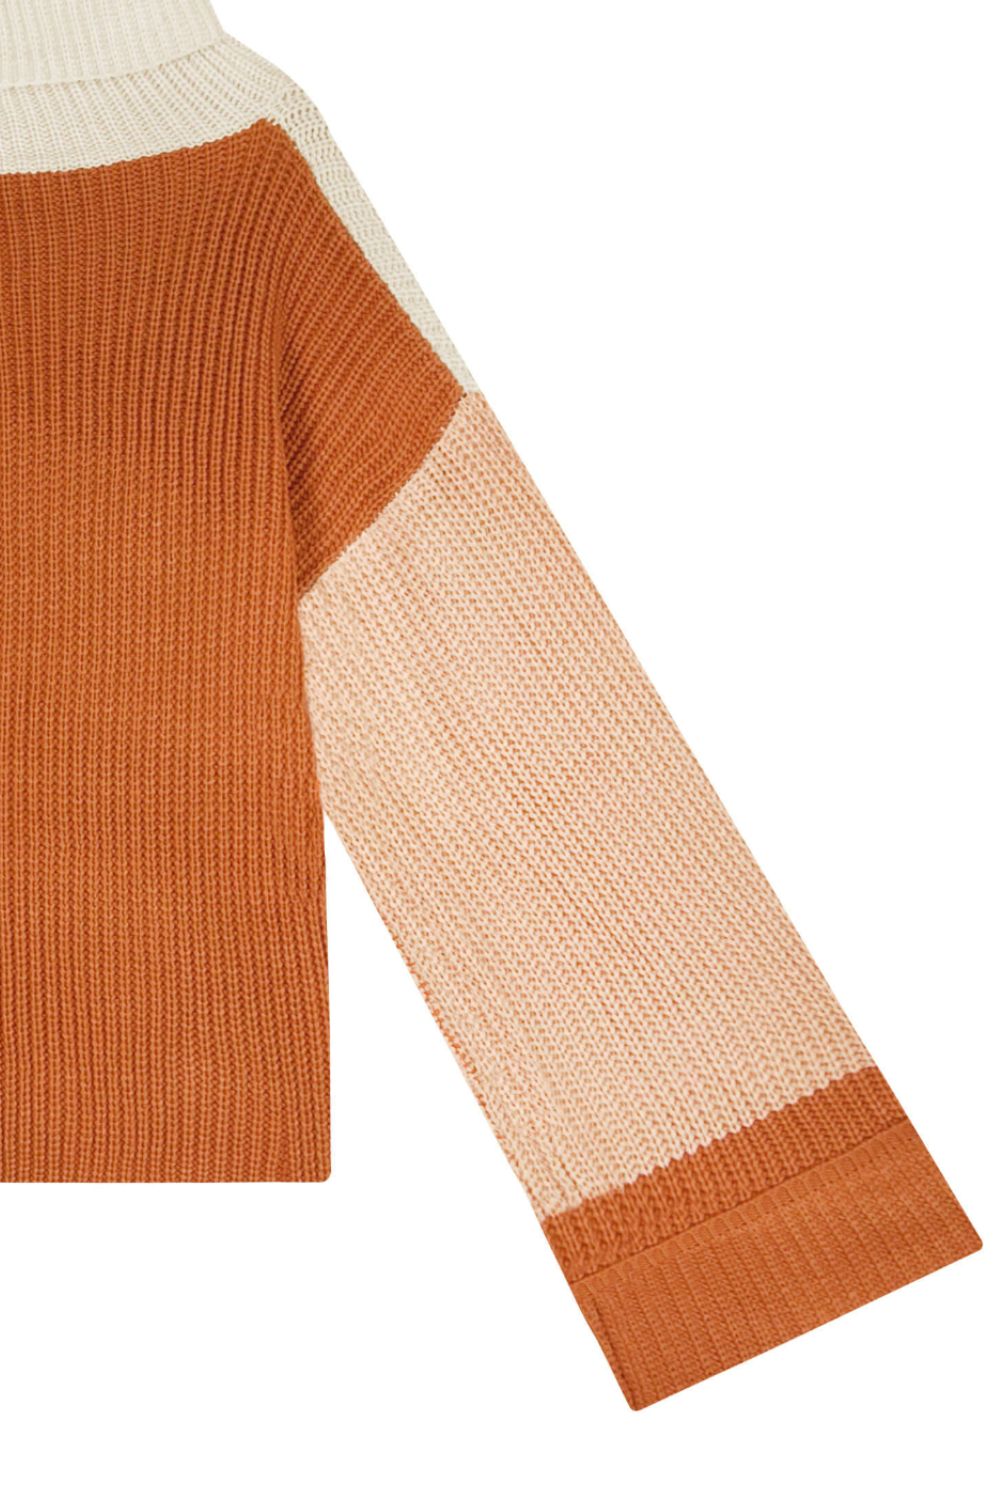 Color Block Rib-Knit Cowl Neck Sweater